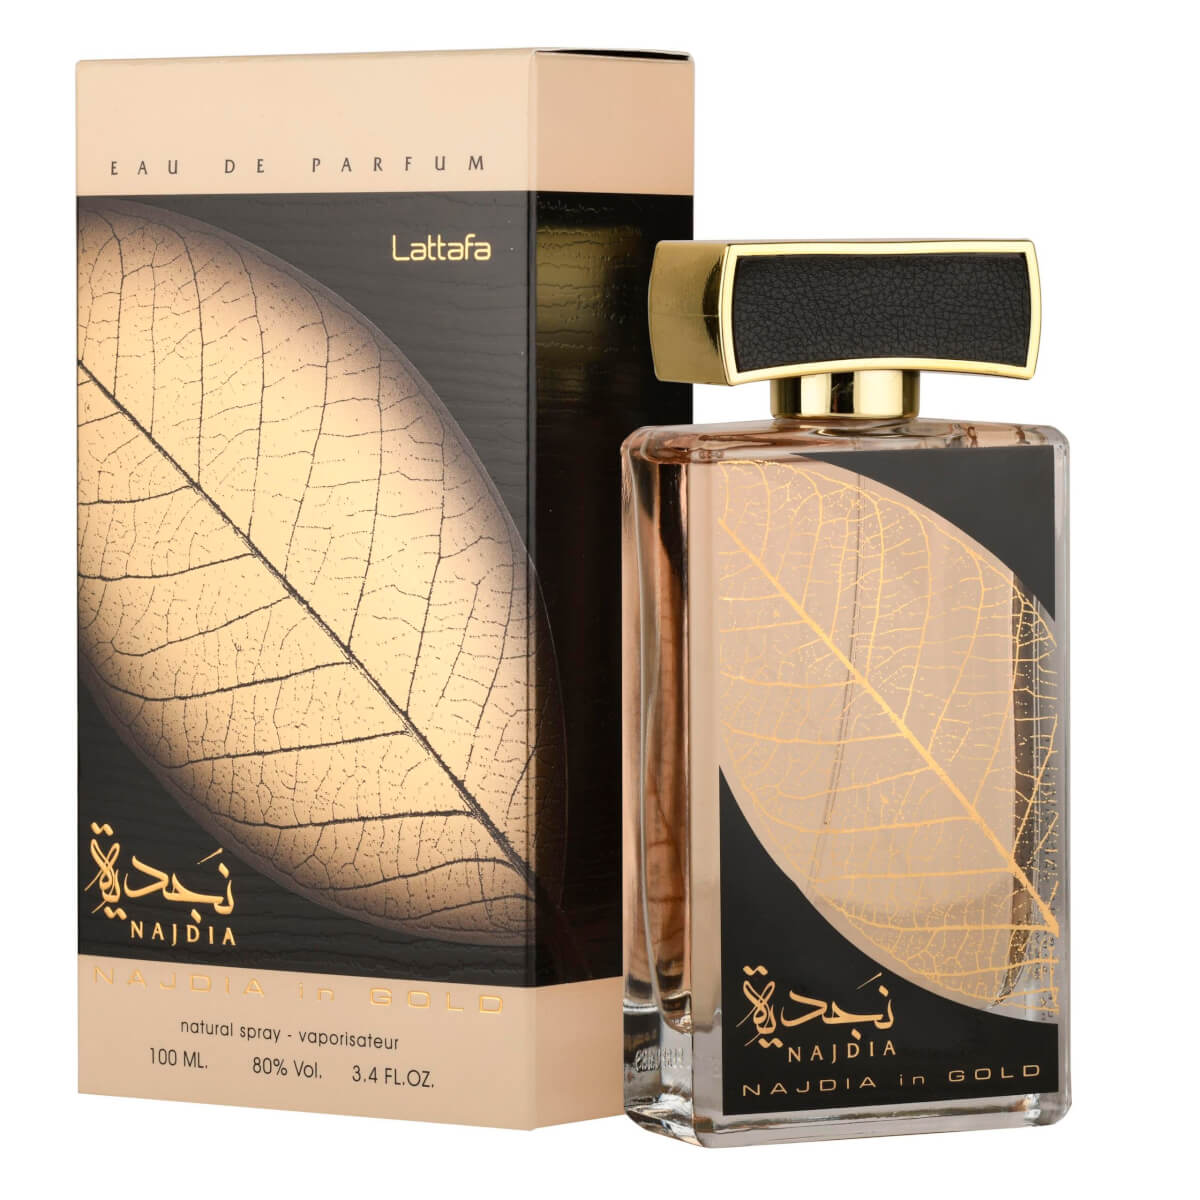 Najdia Gold Perfume / Eau De Parfum 100Ml By Lattafa